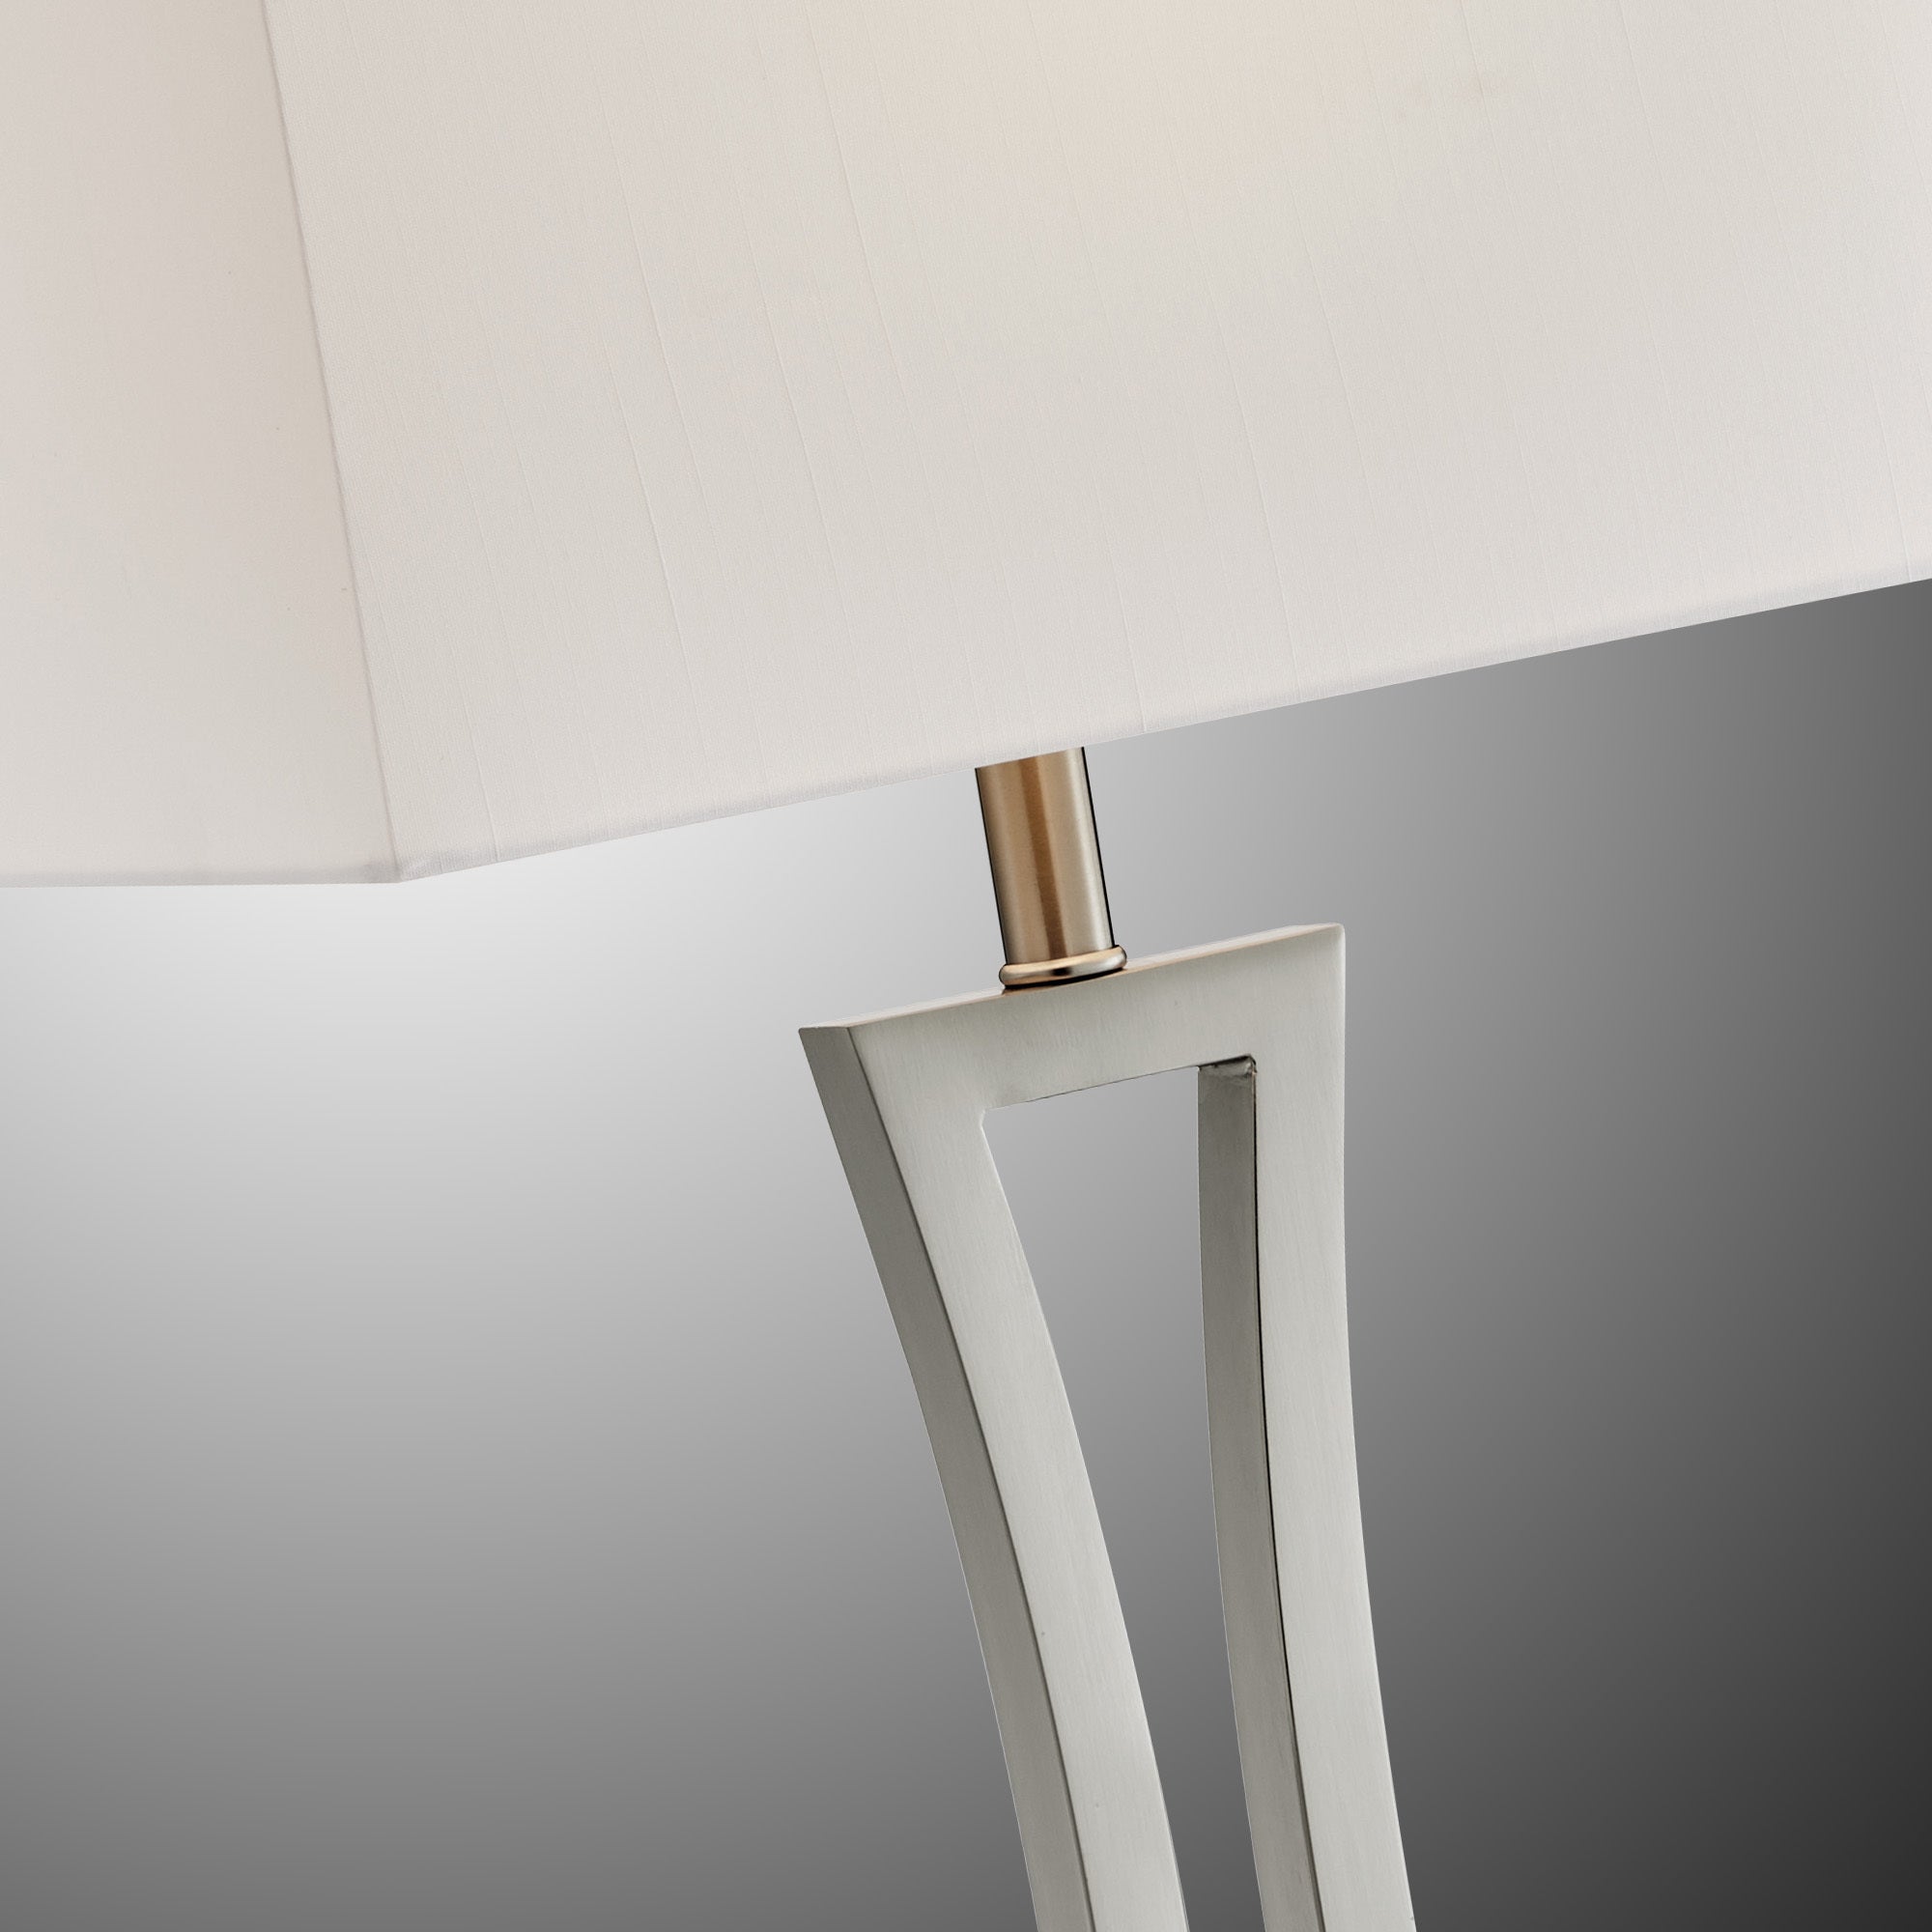 Details about   CLI FIXTURES WHITE LAMP LGL-INC NIB 